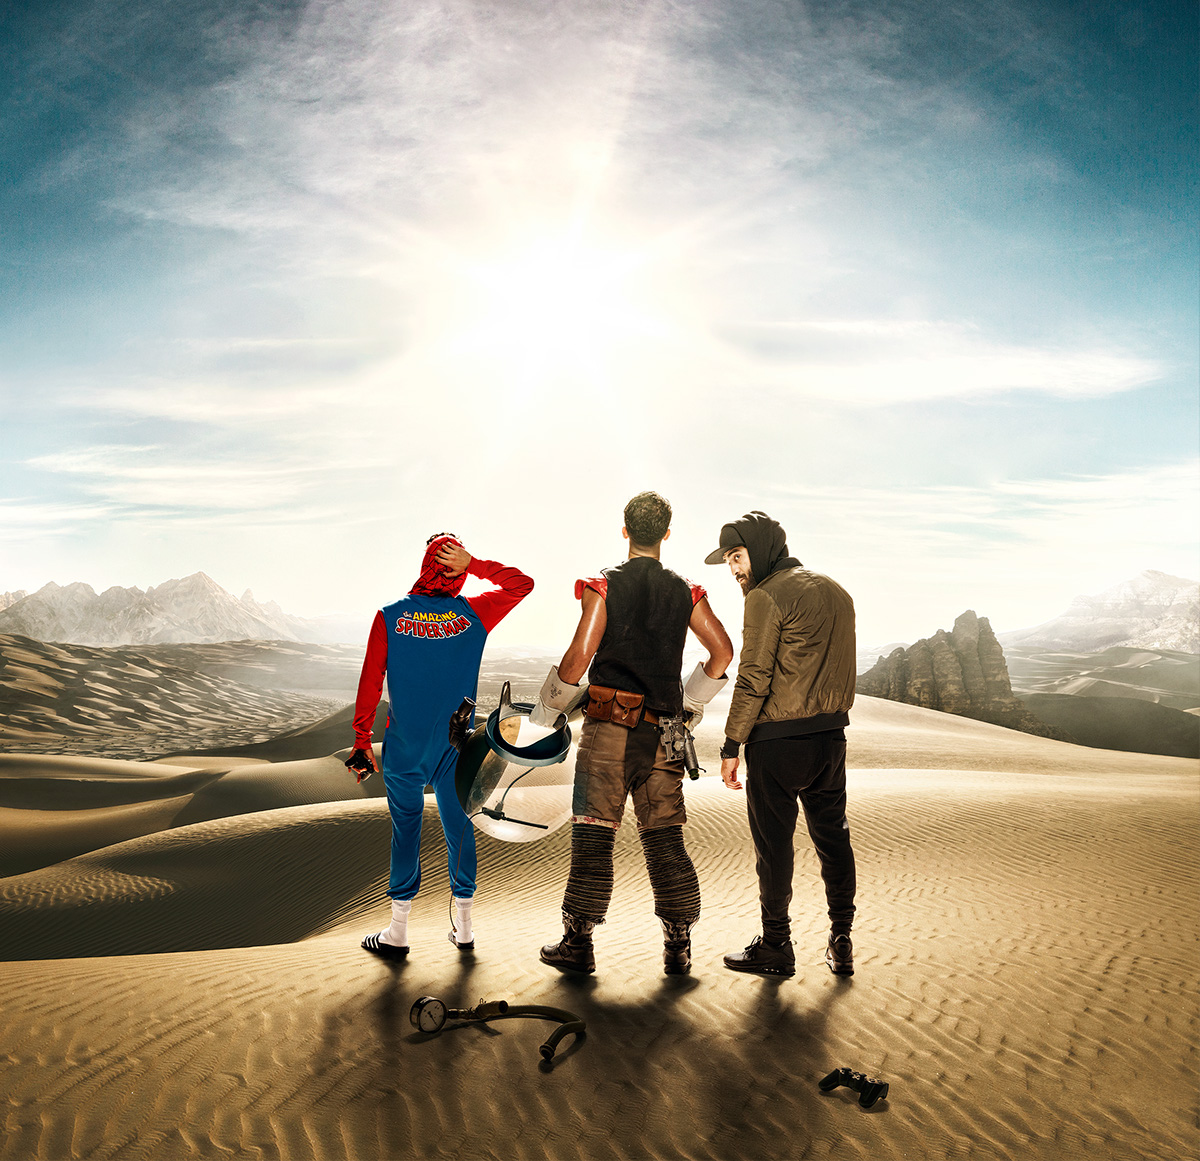 postworks Theatre digitally altered art-direction Concepting heat desert spiderman